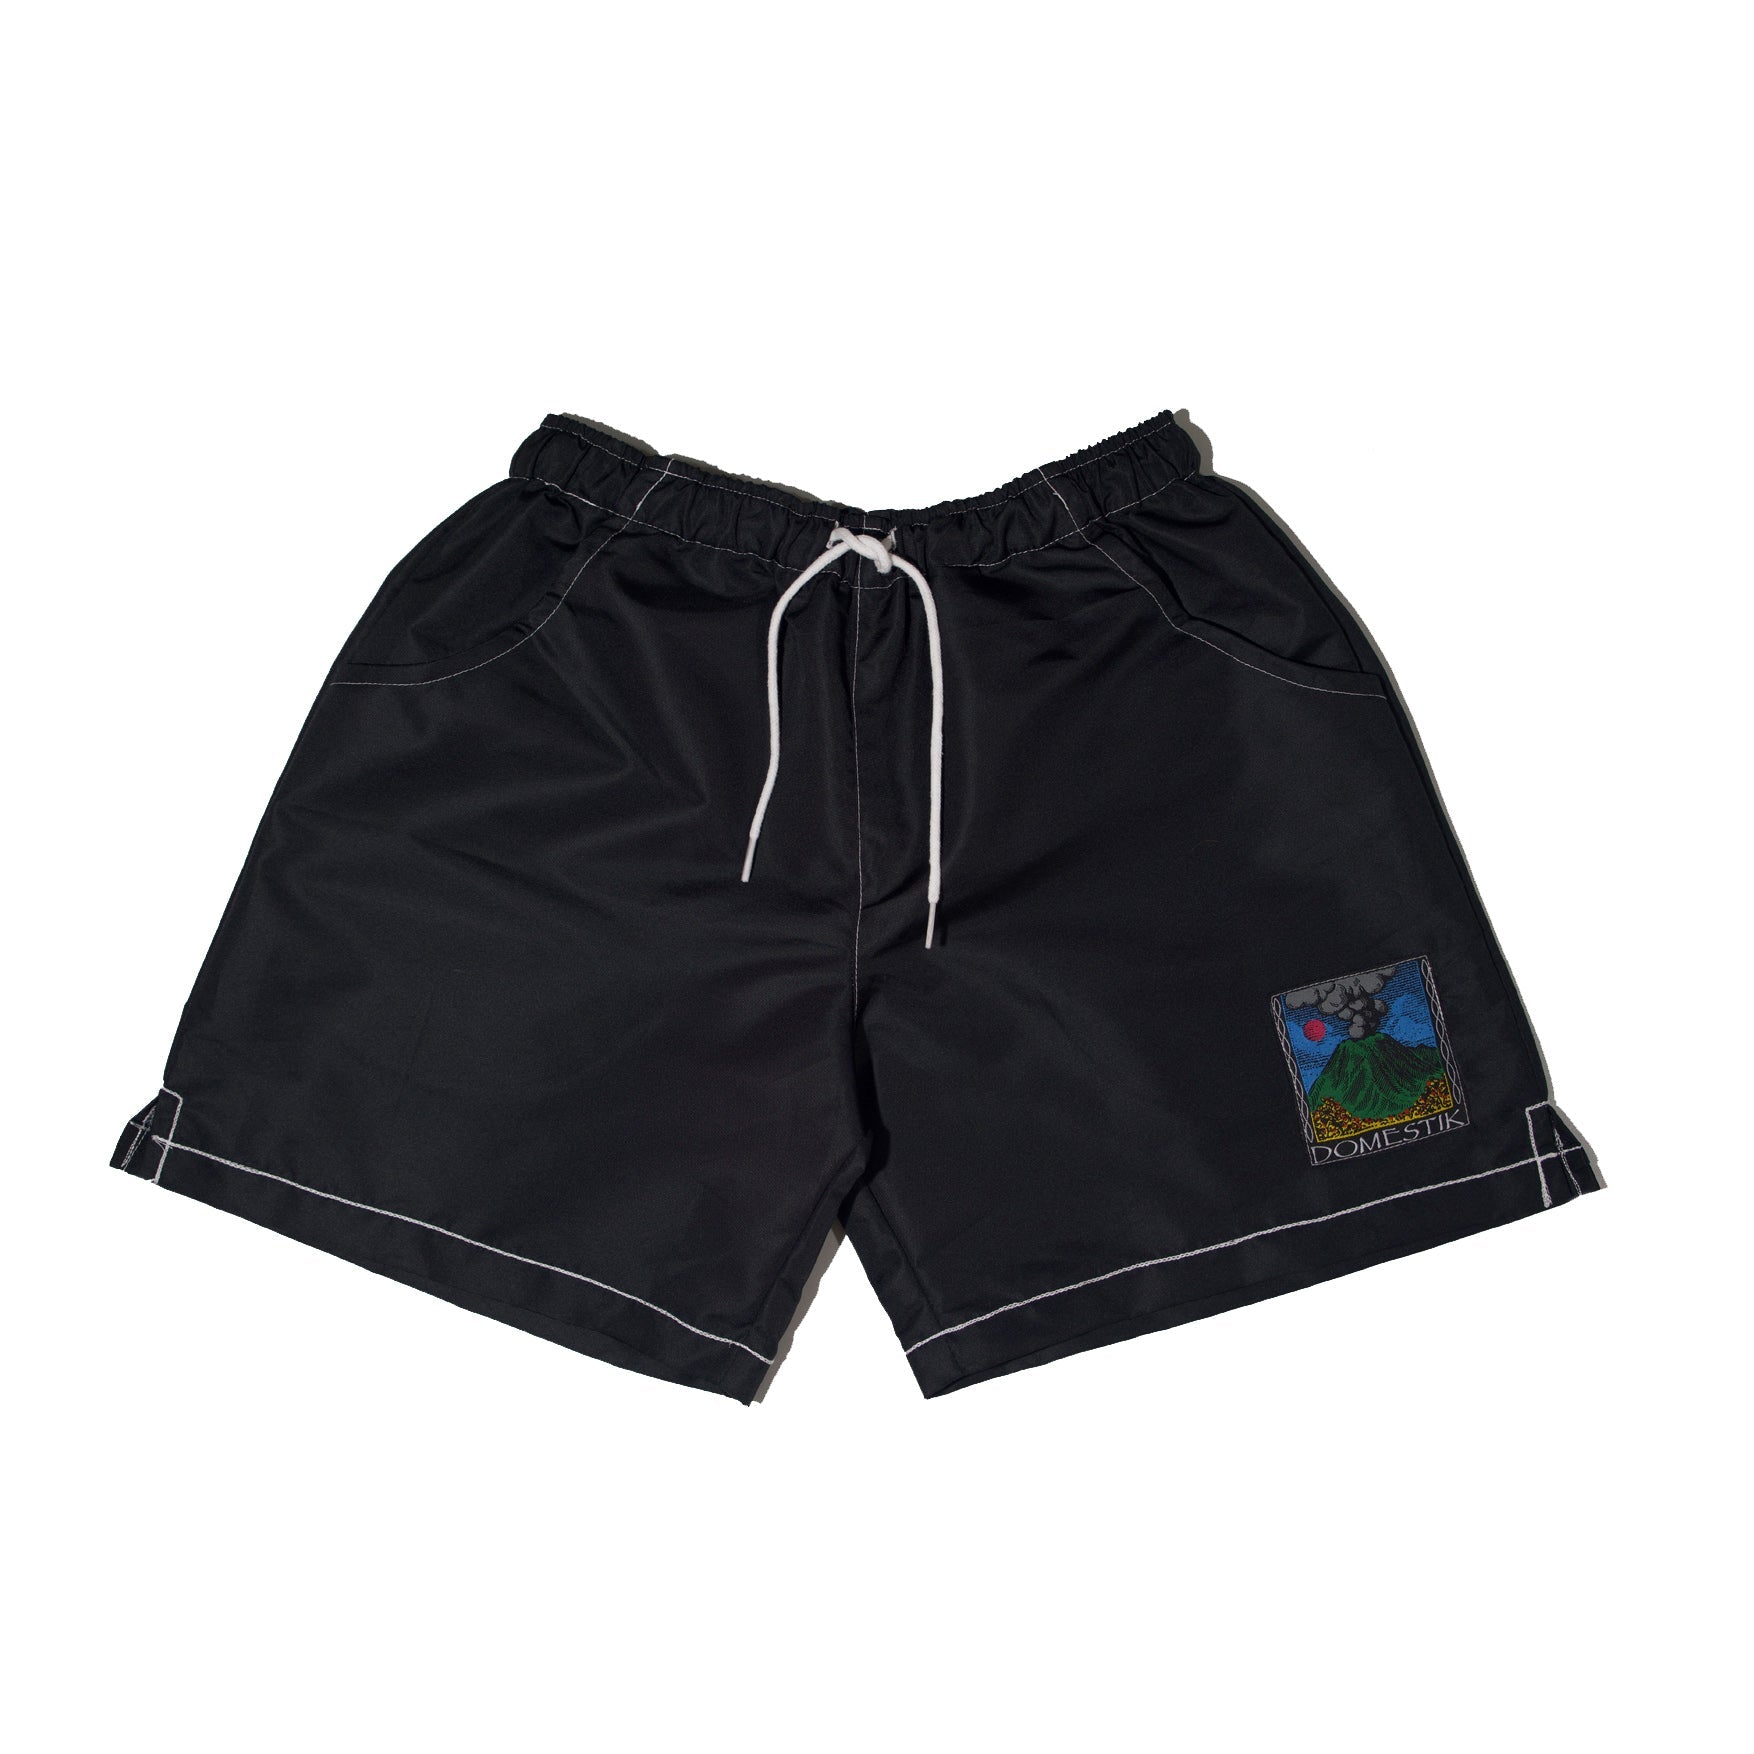 Mountain Shorts - Black